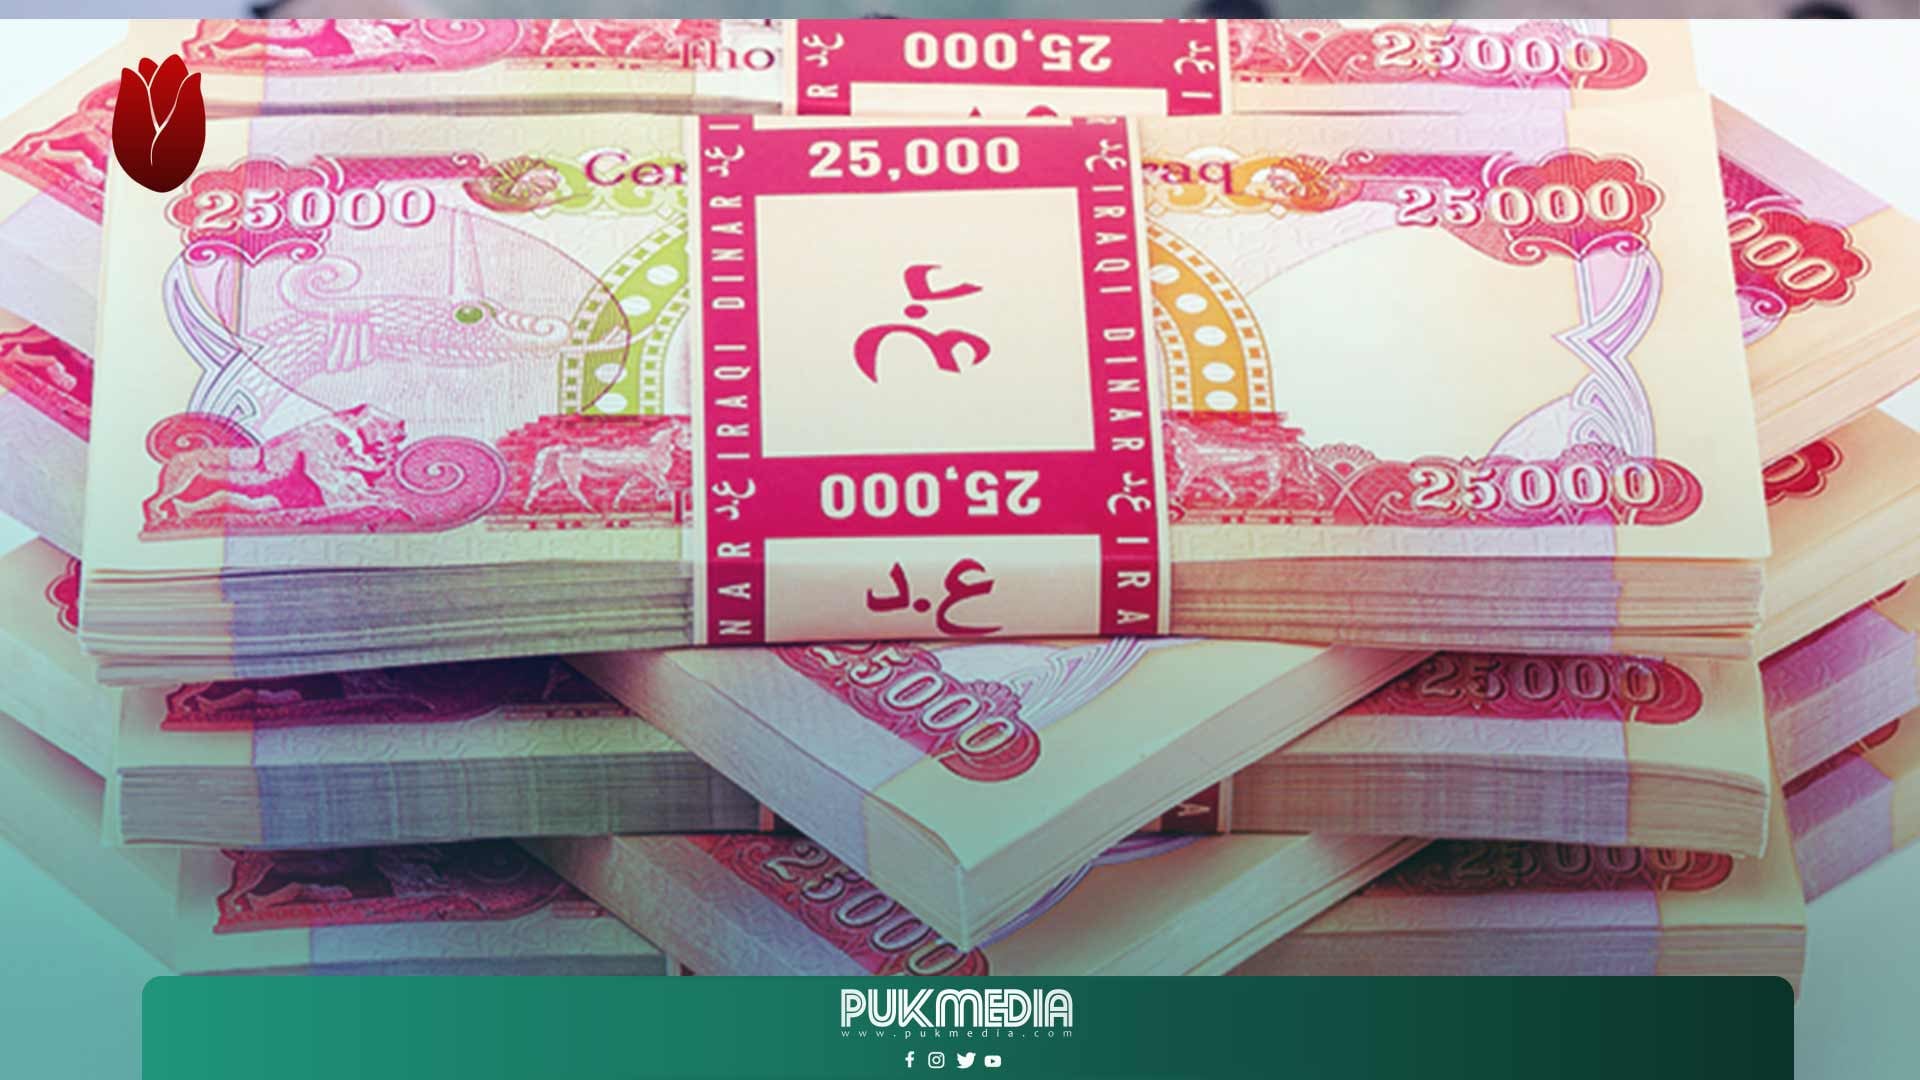 PUKmedia ينشر احدث المعلومات بشأن صرف رواتب موظفي كوردستان